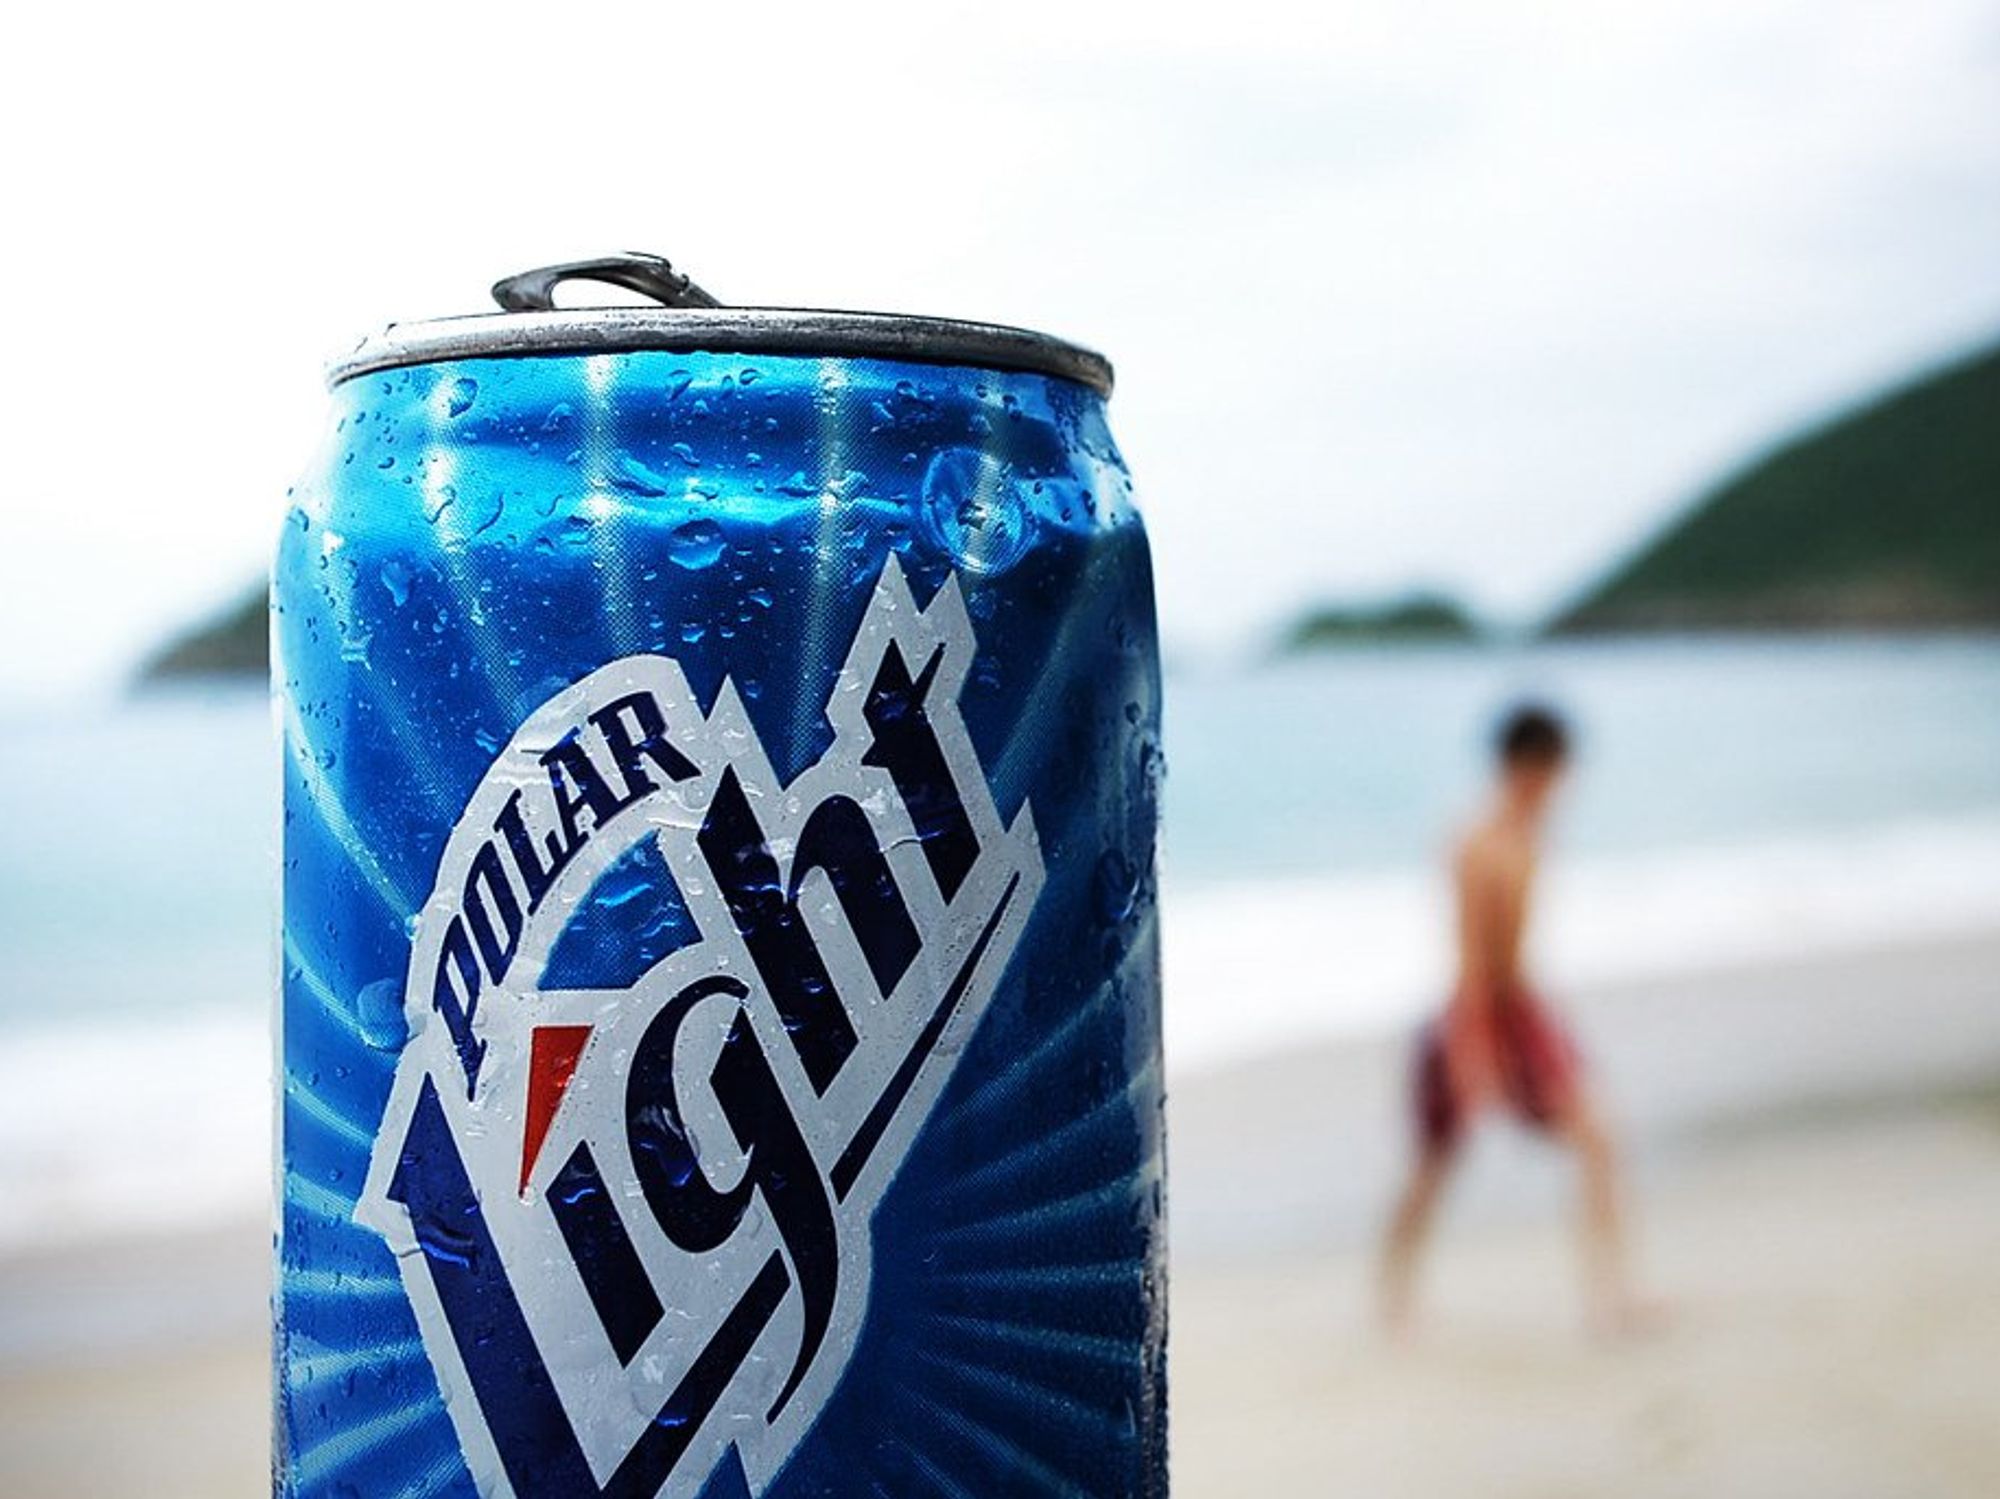 Venezuelan 'Polar' beer against the backdrop of a Caribbean beach